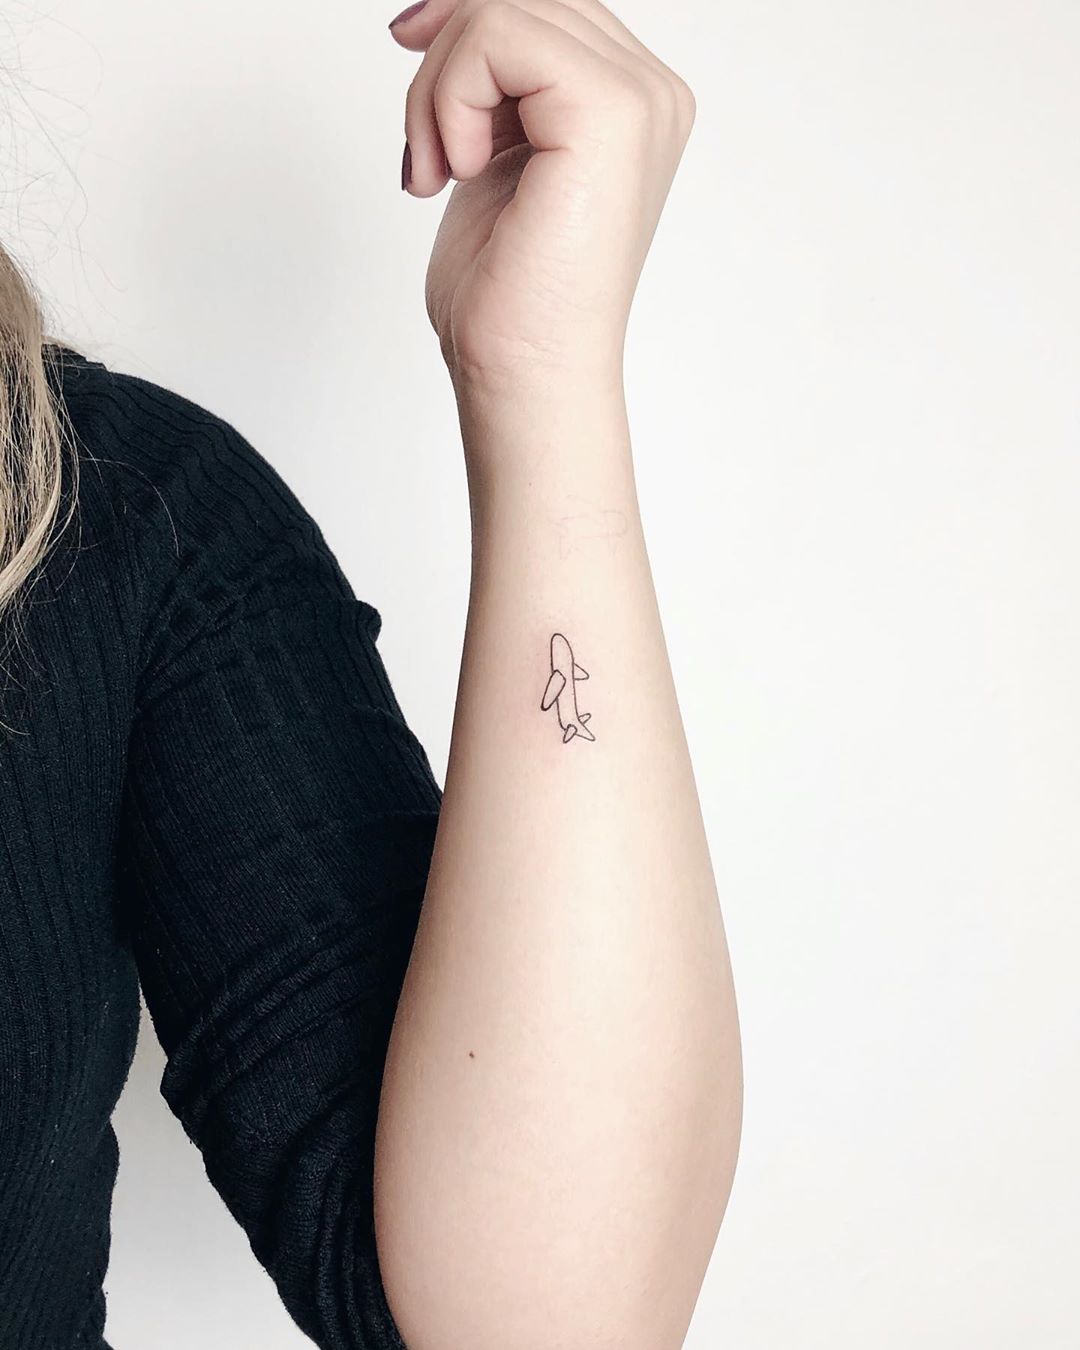 50 Eye-Catching Wrist Tattoo Ideas | Art and Design